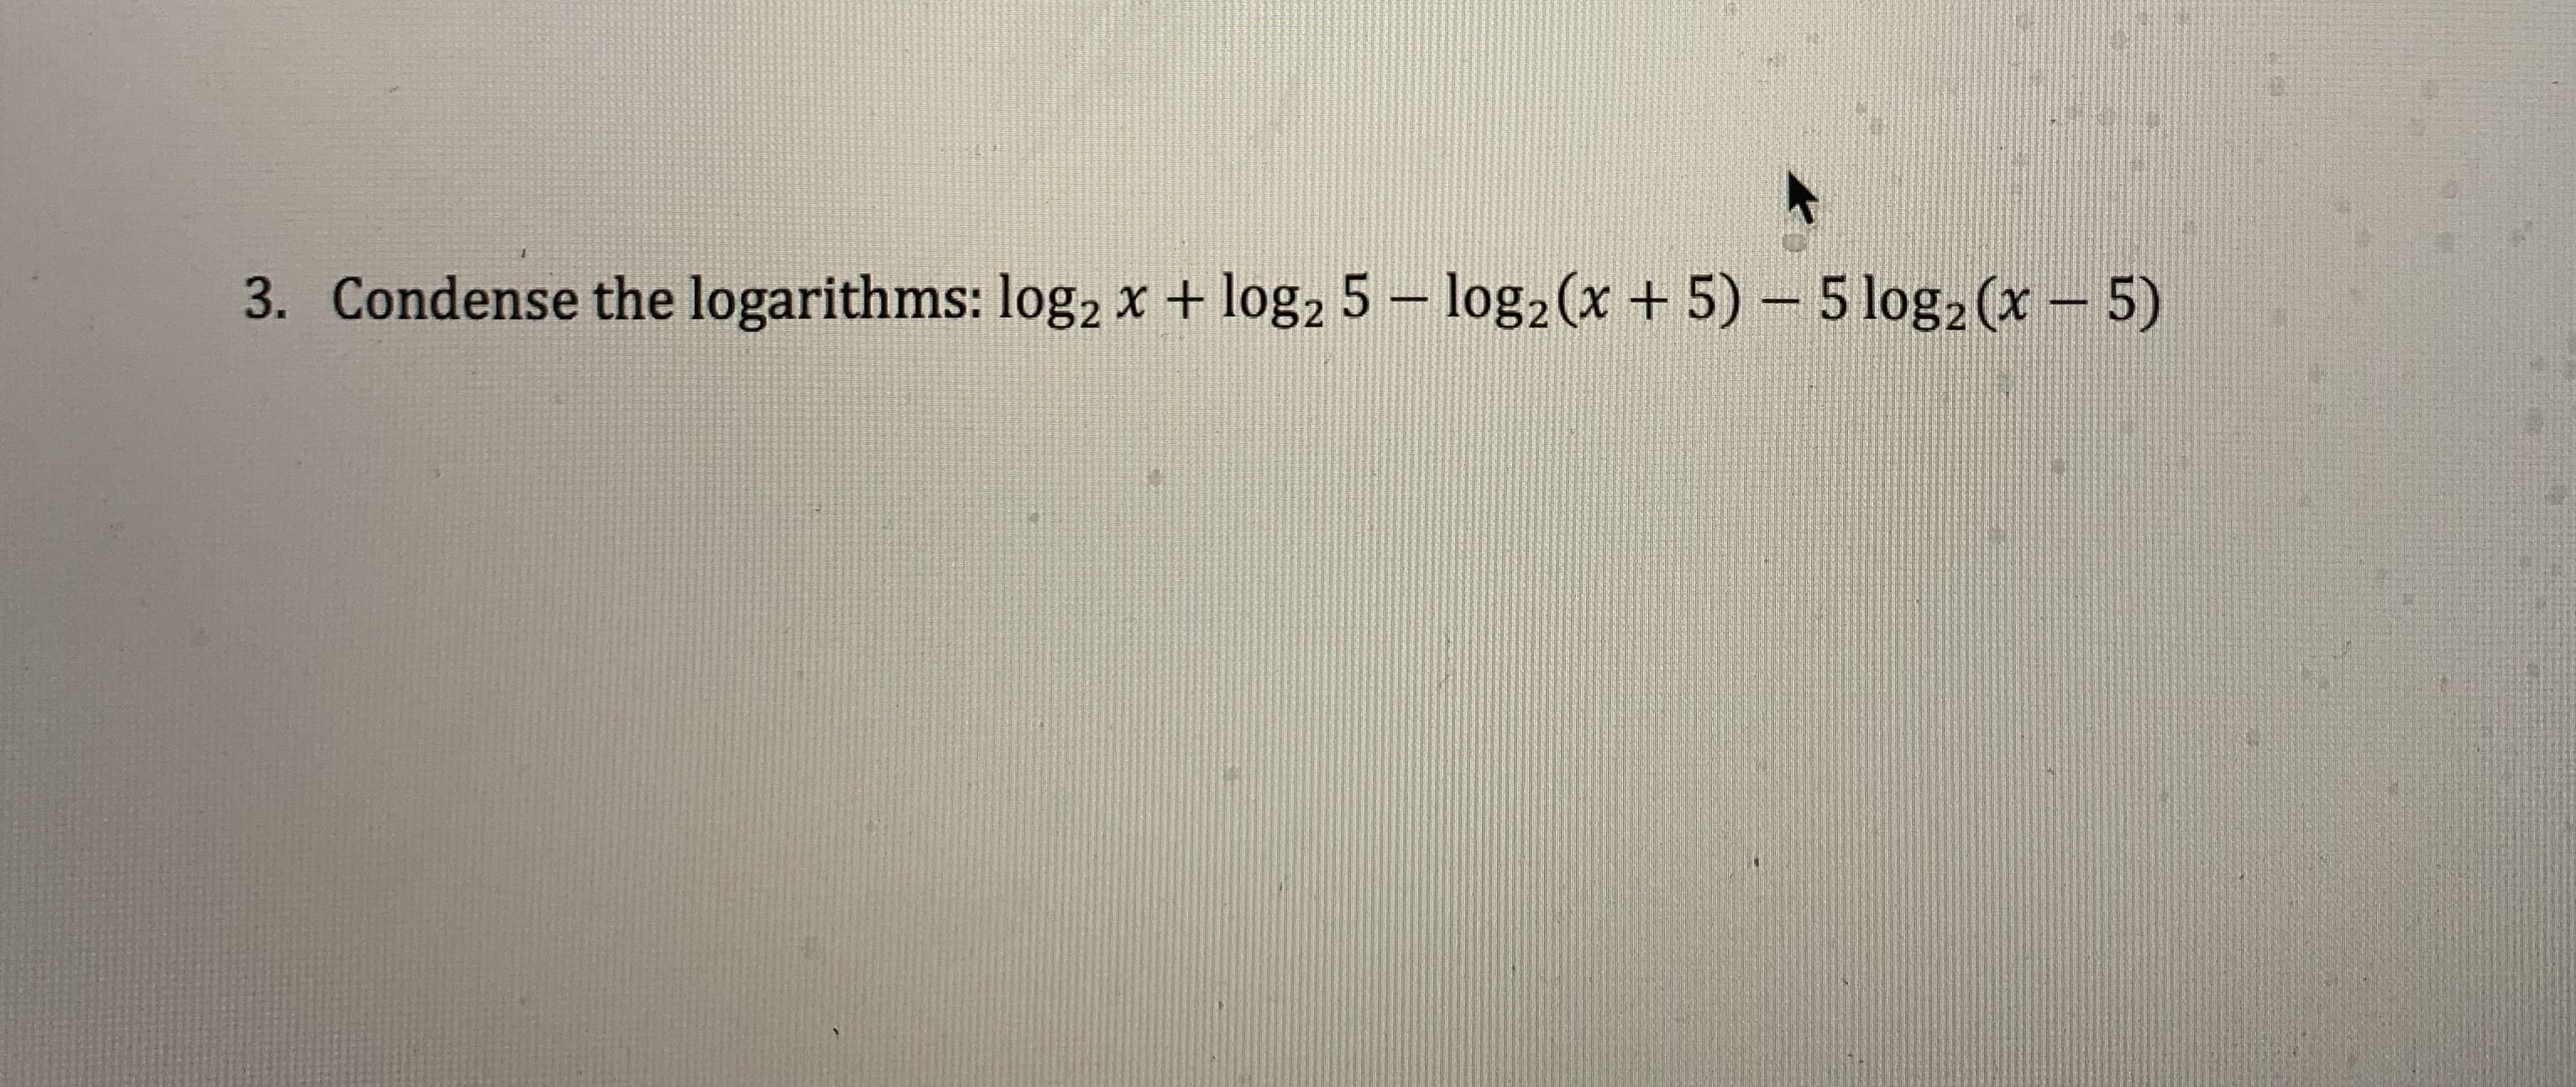 3. Condense the logarithms: log2 x + log, 5 – log2 (x + 5) - 5 log2 (x - 5)
